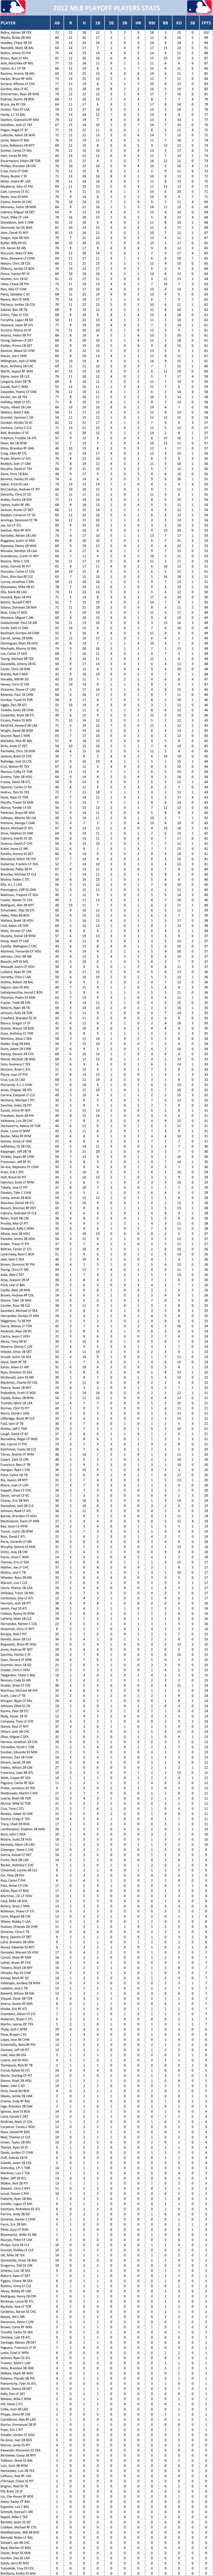 2012 Major League Baseball Pool Playoff Player Stats